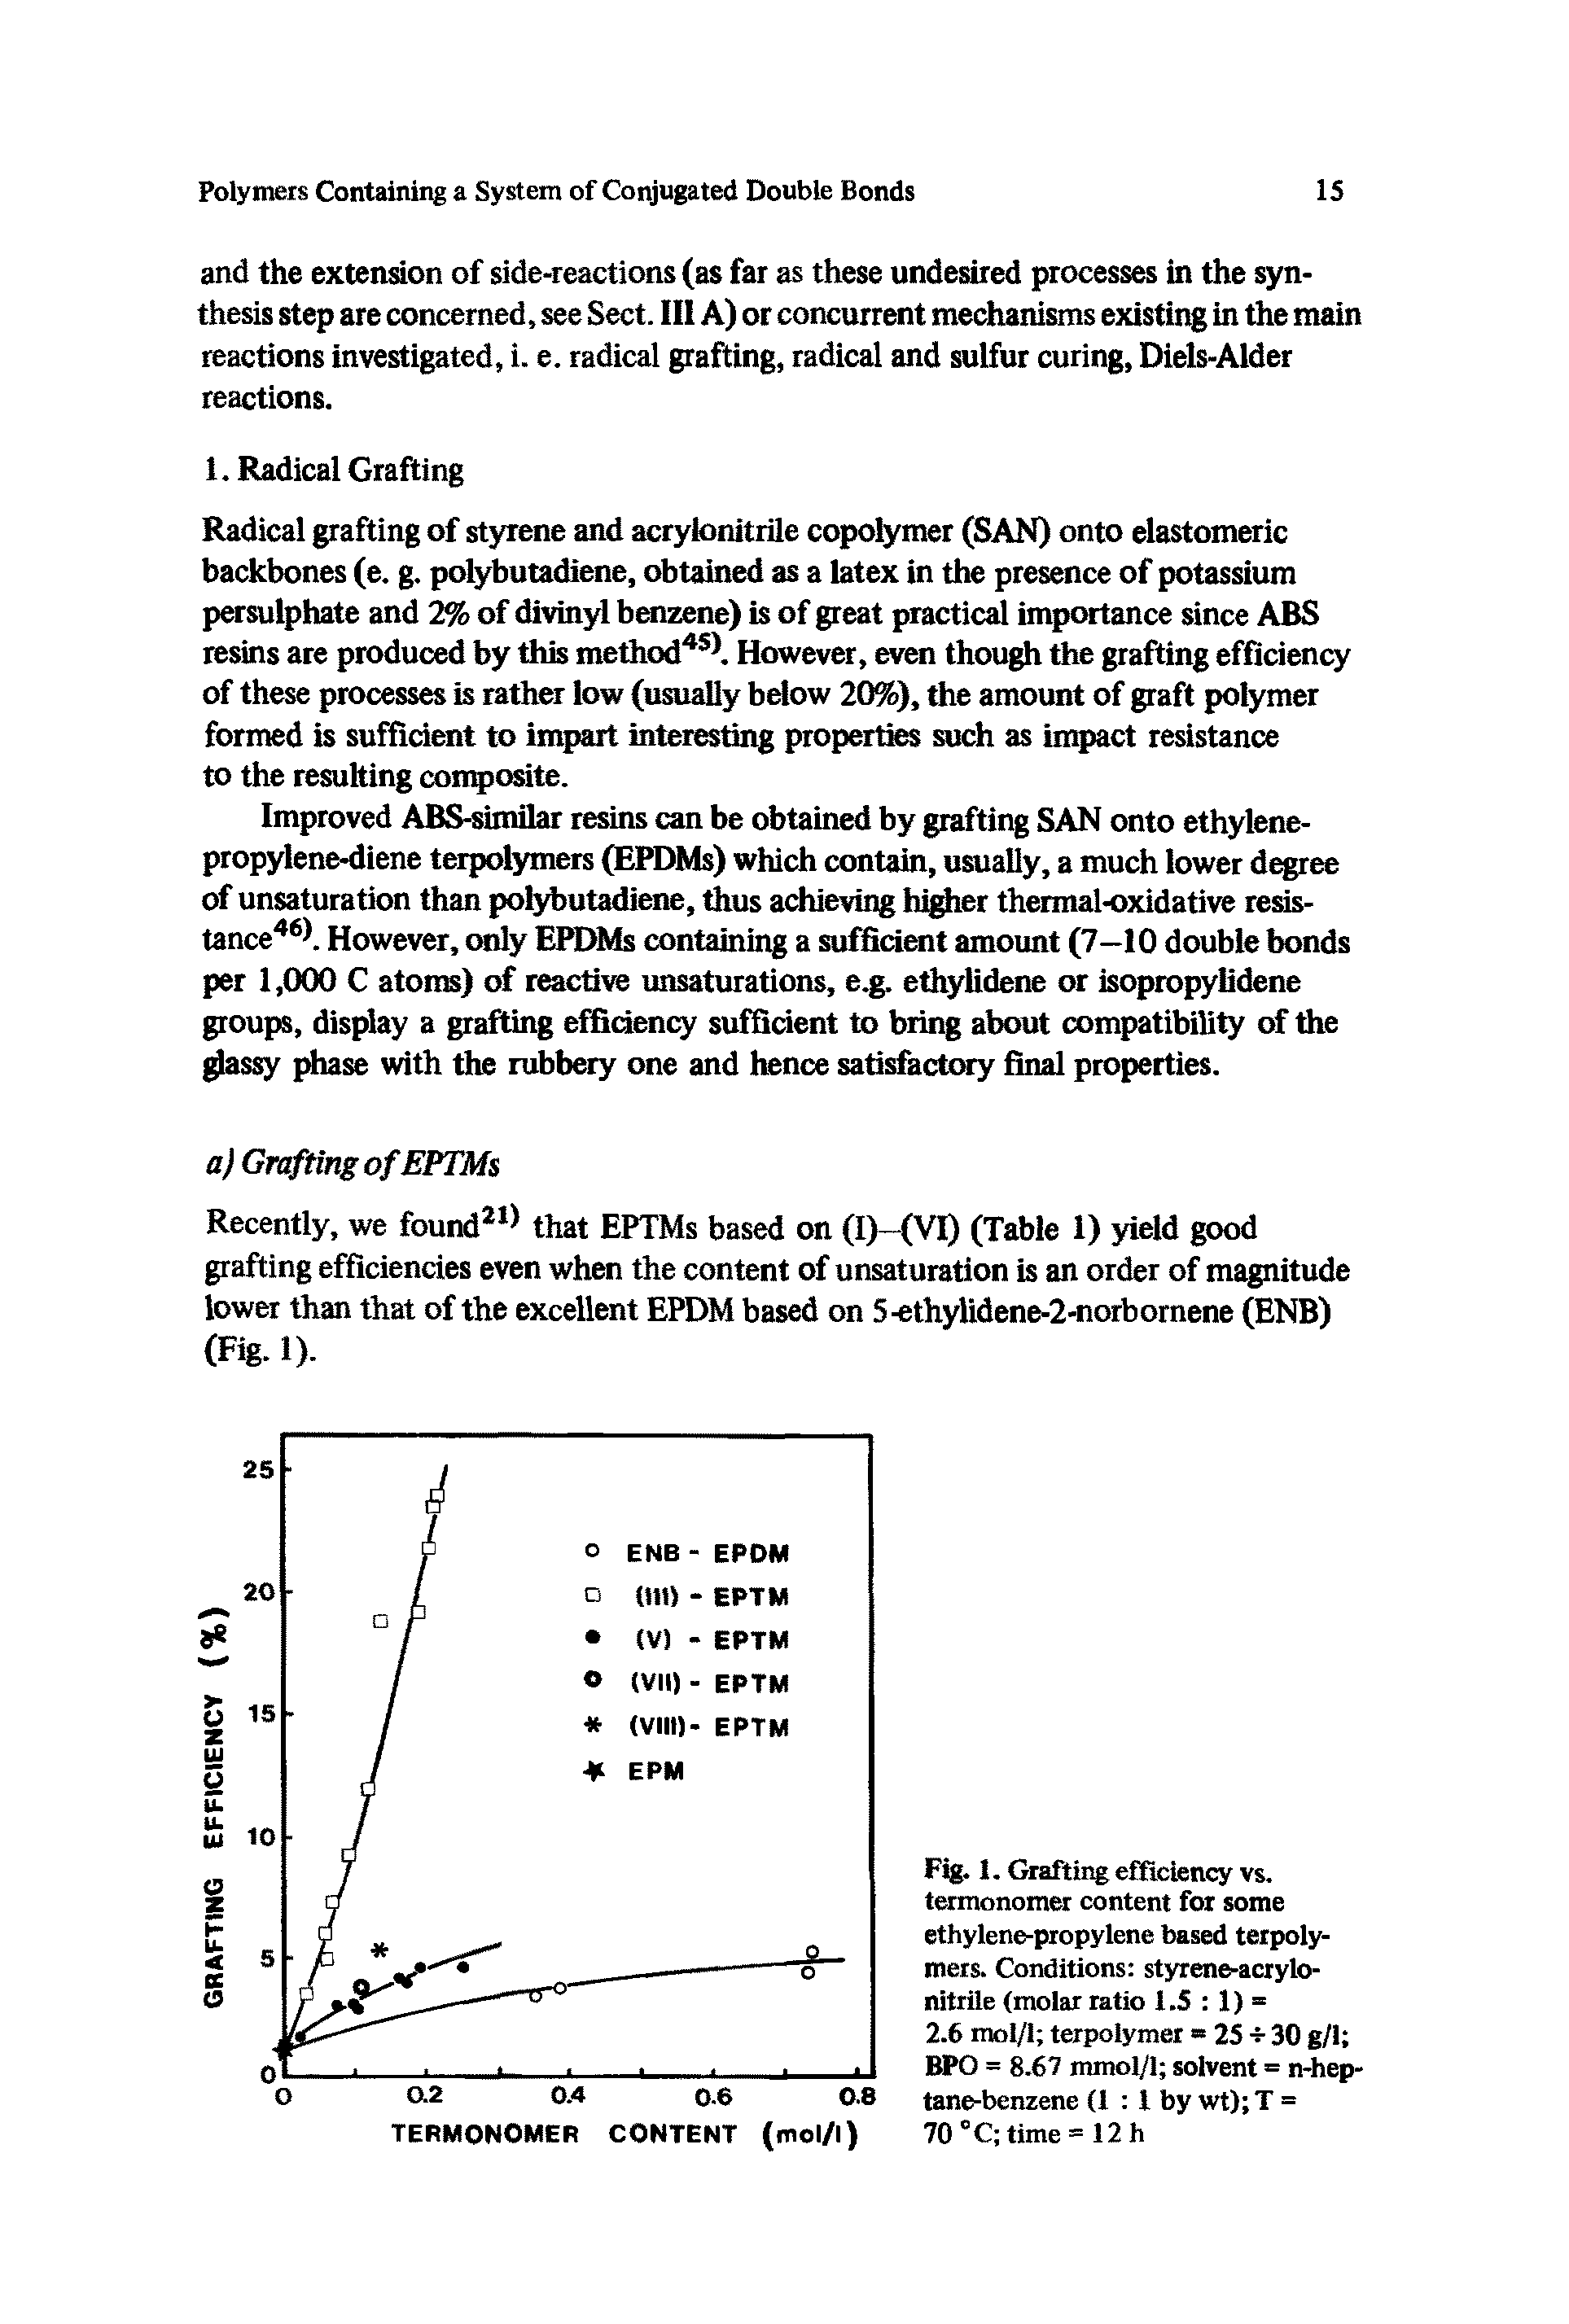 Fig. 1. Grafting efficiency vs. termonomer content for some ethylene-propylene based terpolymers. Conditions styrene-acrylonitrile (molar ratio 1.5 1) =...